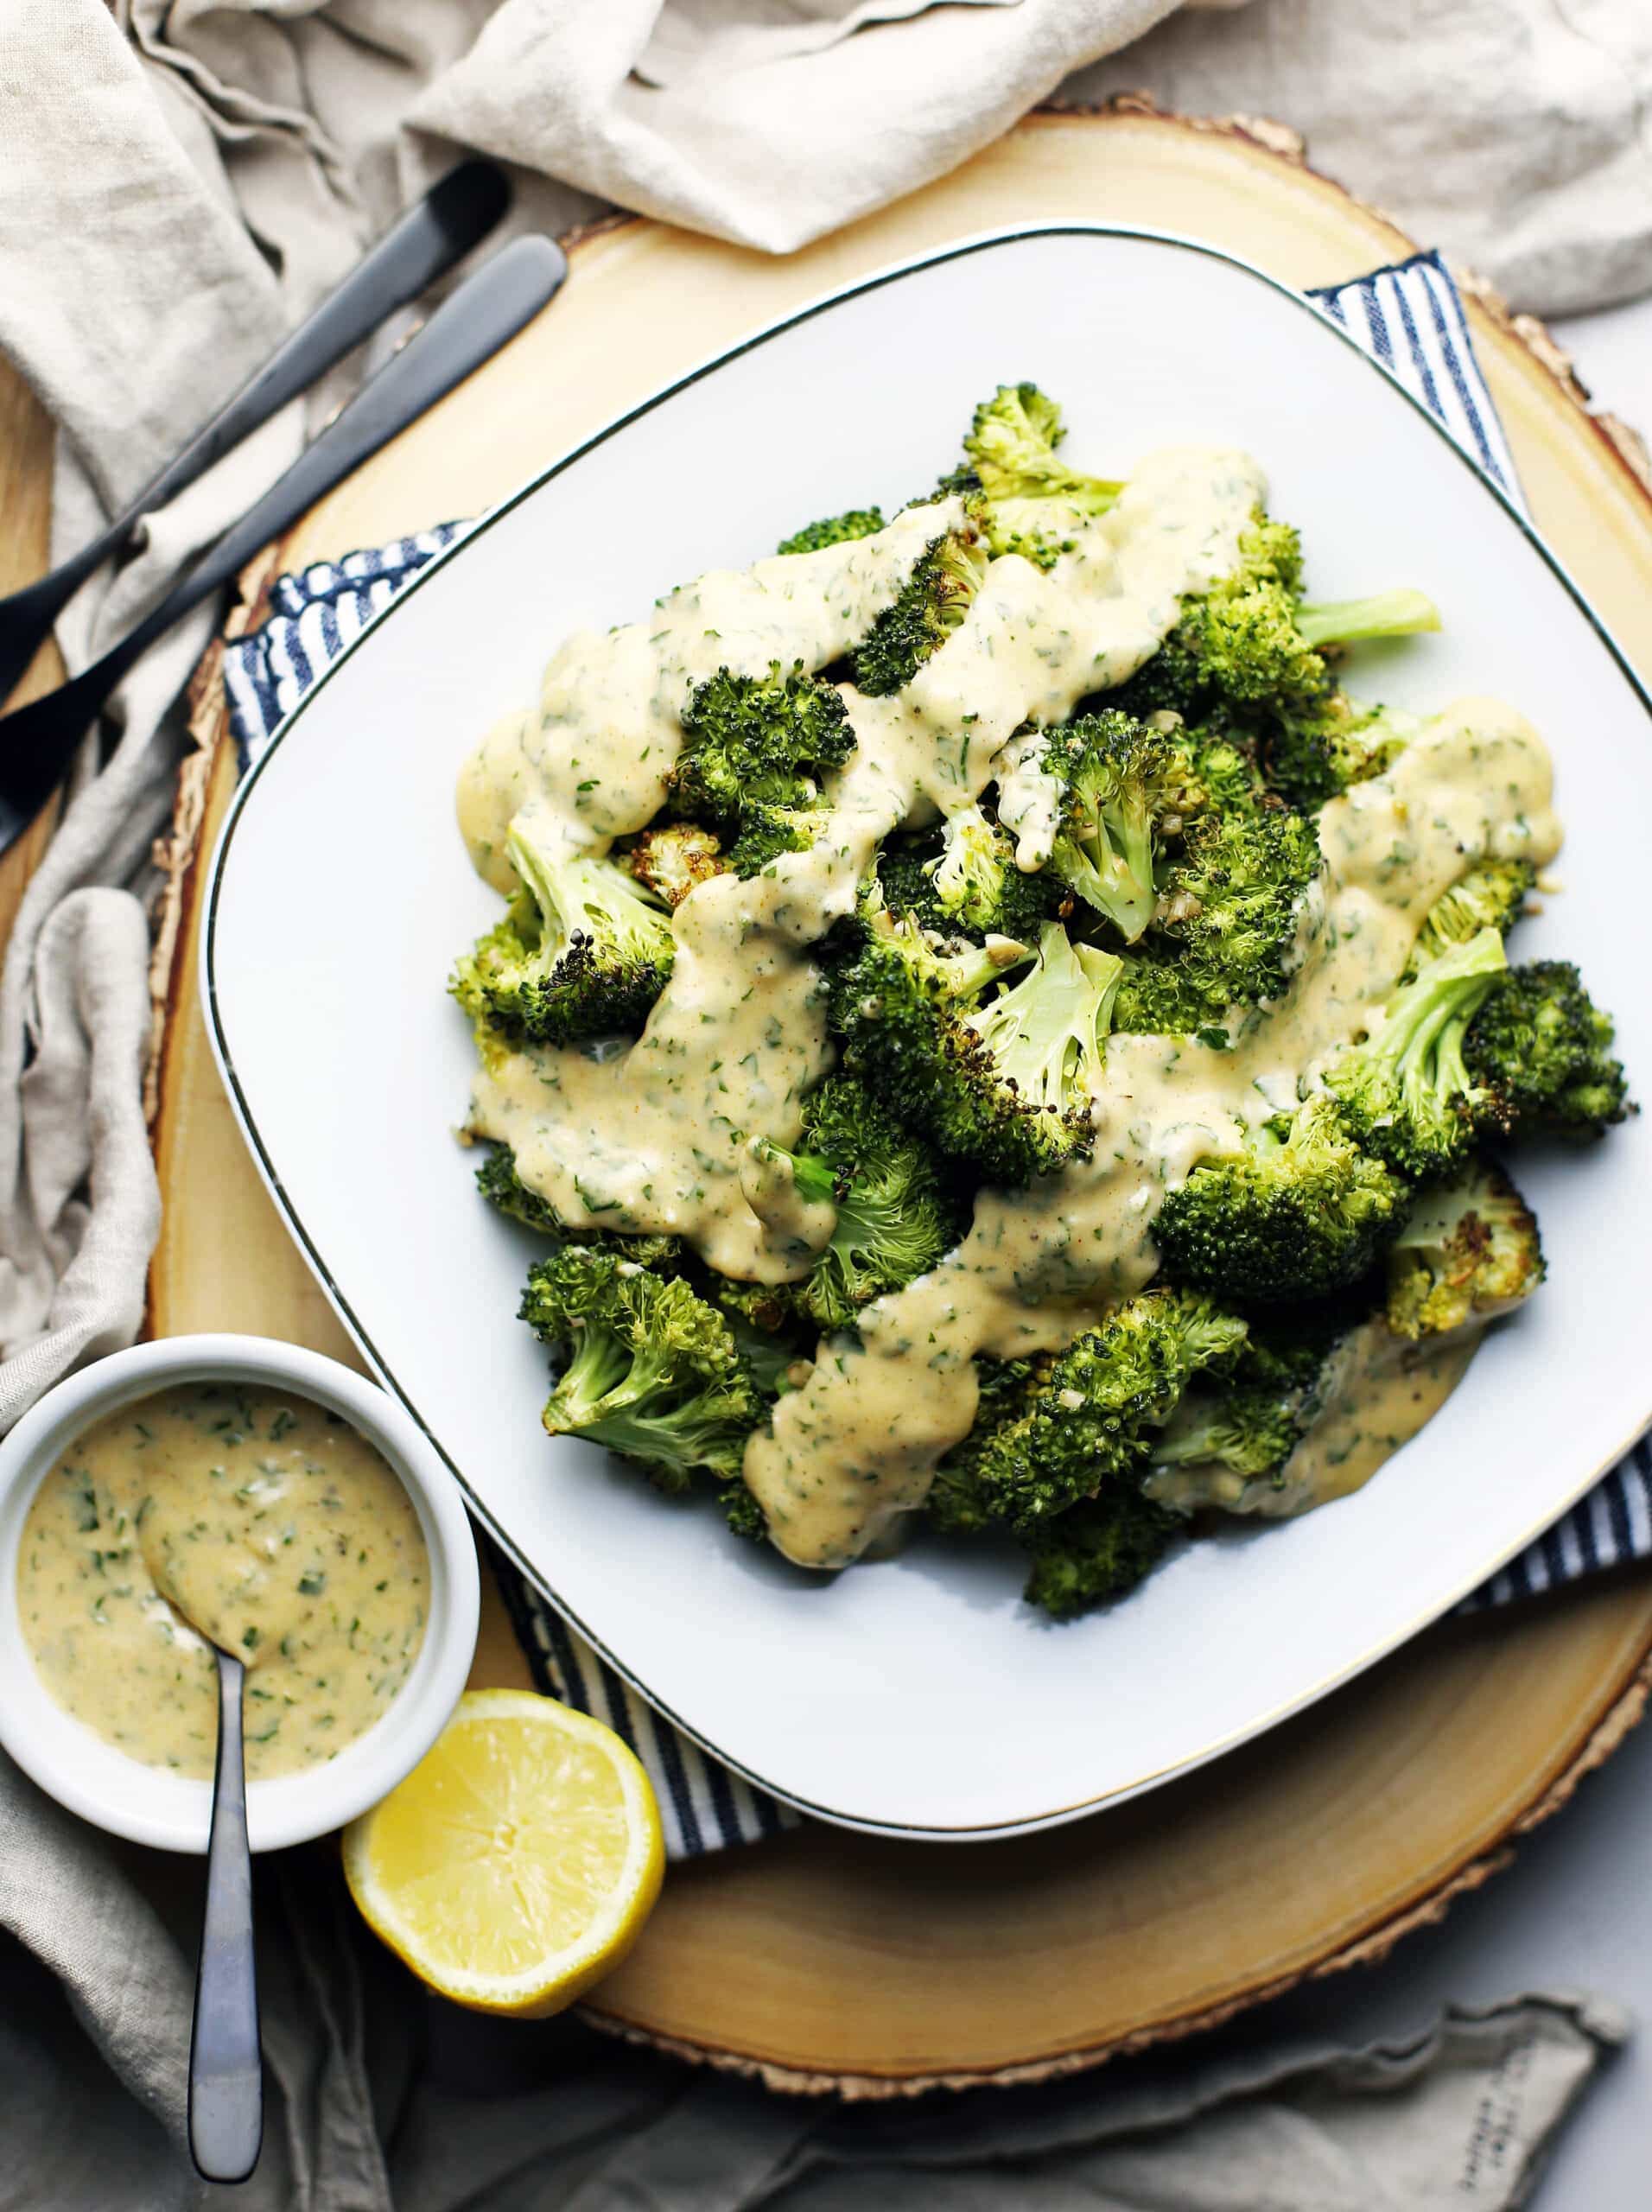 Roasted Broccoli with Lemon Parsley Hollandaise Sauce